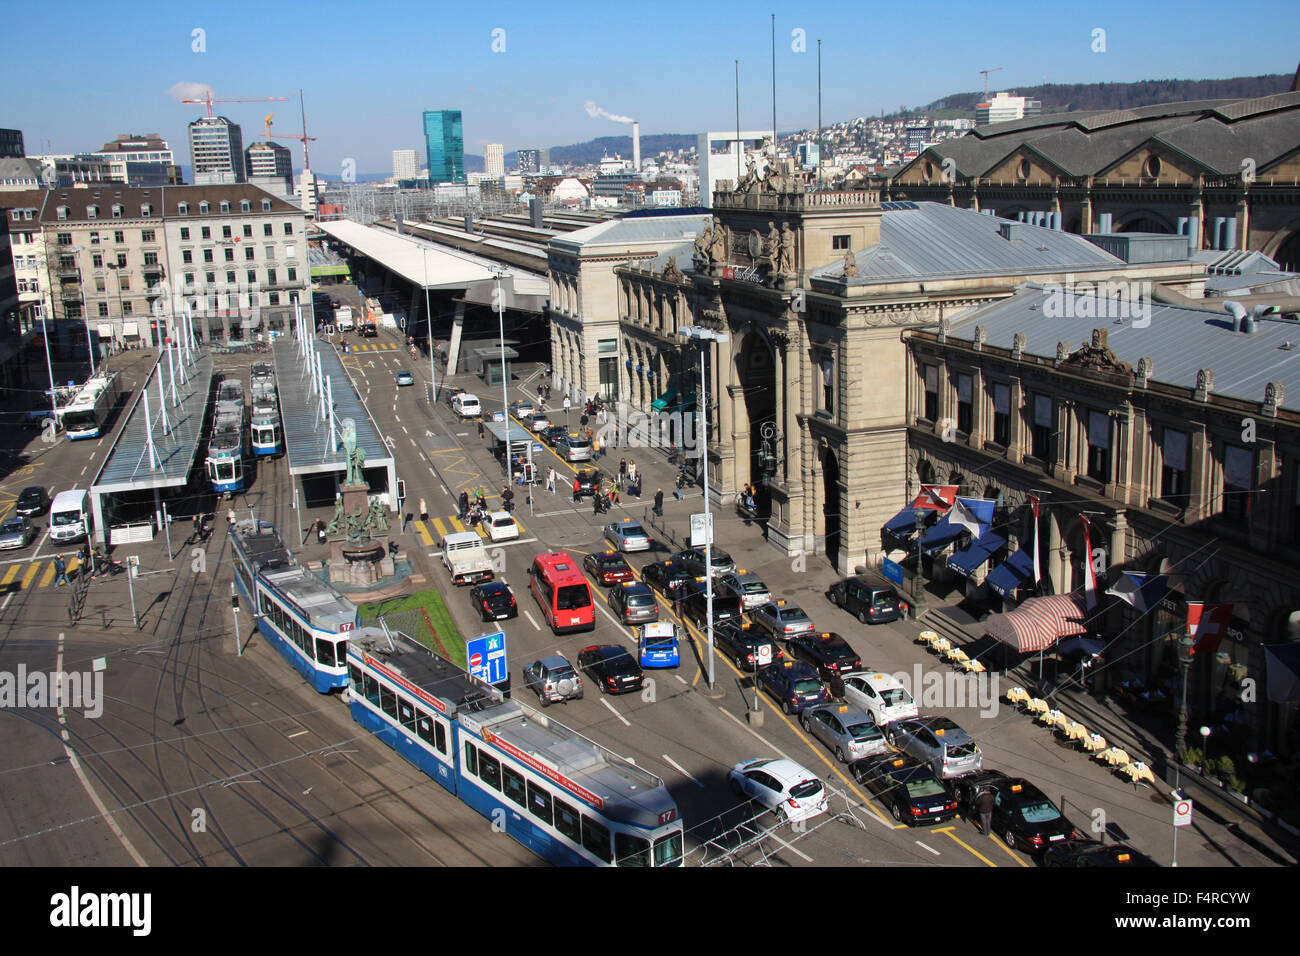 Zurigo, Svizzera, Europa, Bahnhofplatz, stazione centrale, stazione ferroviaria, Escher, Alfred Escher, statua, tram tram, tra Foto Stock